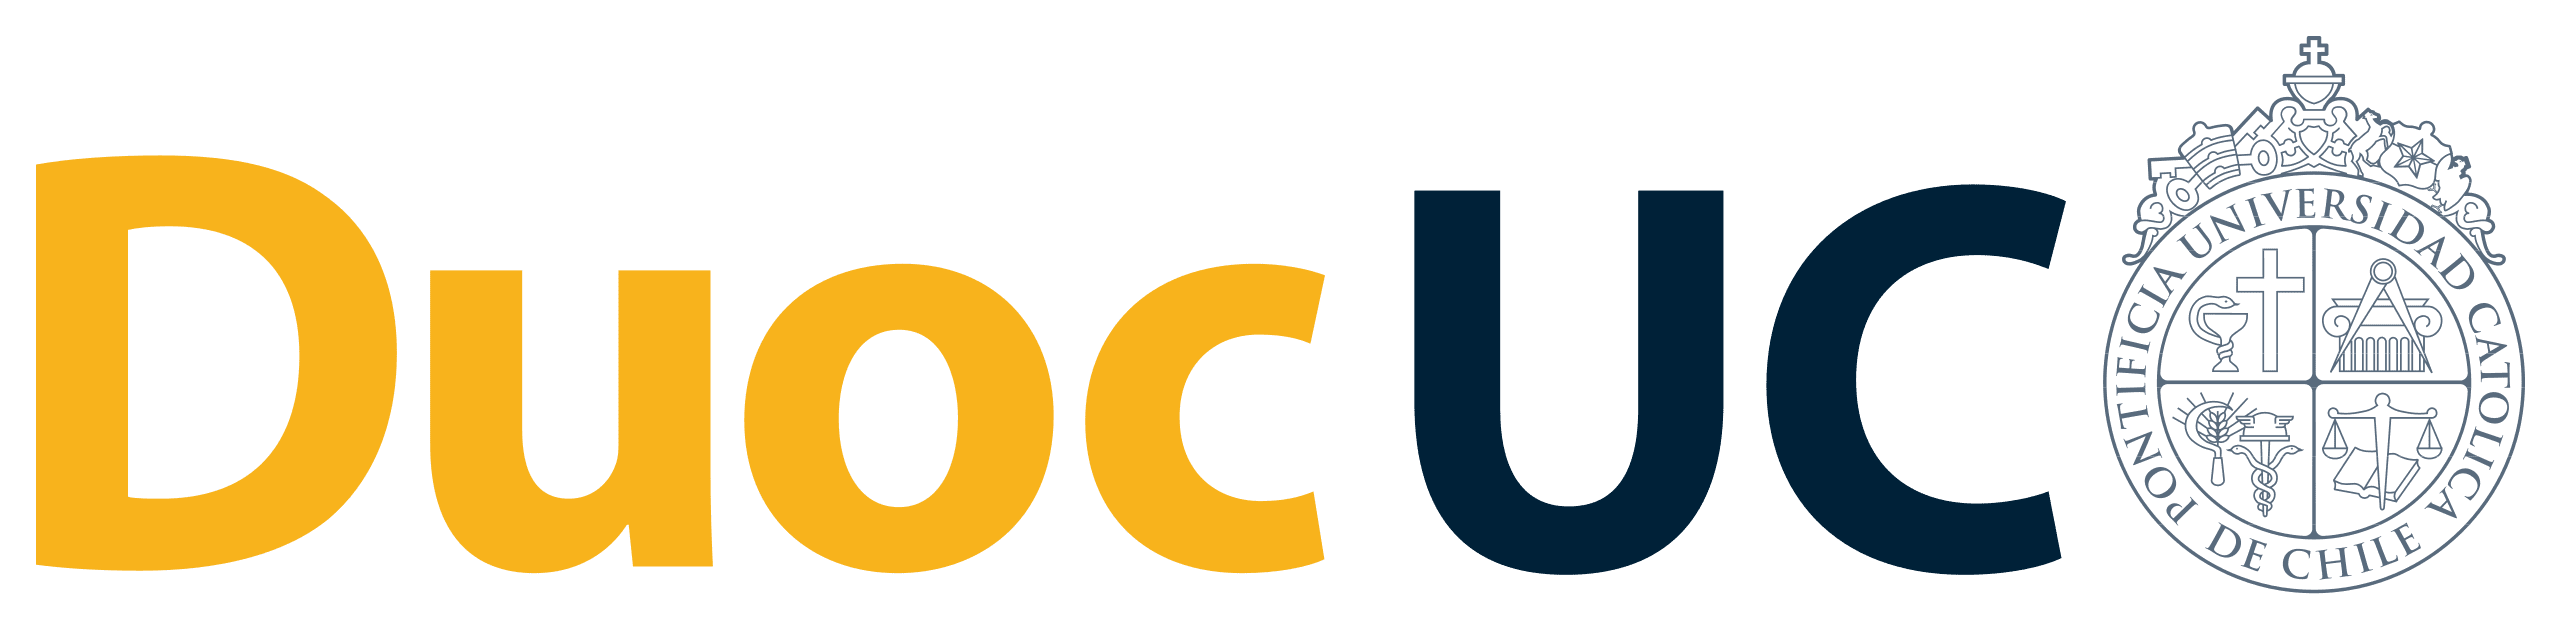 DuocUC : Brand Short Description Type Here.